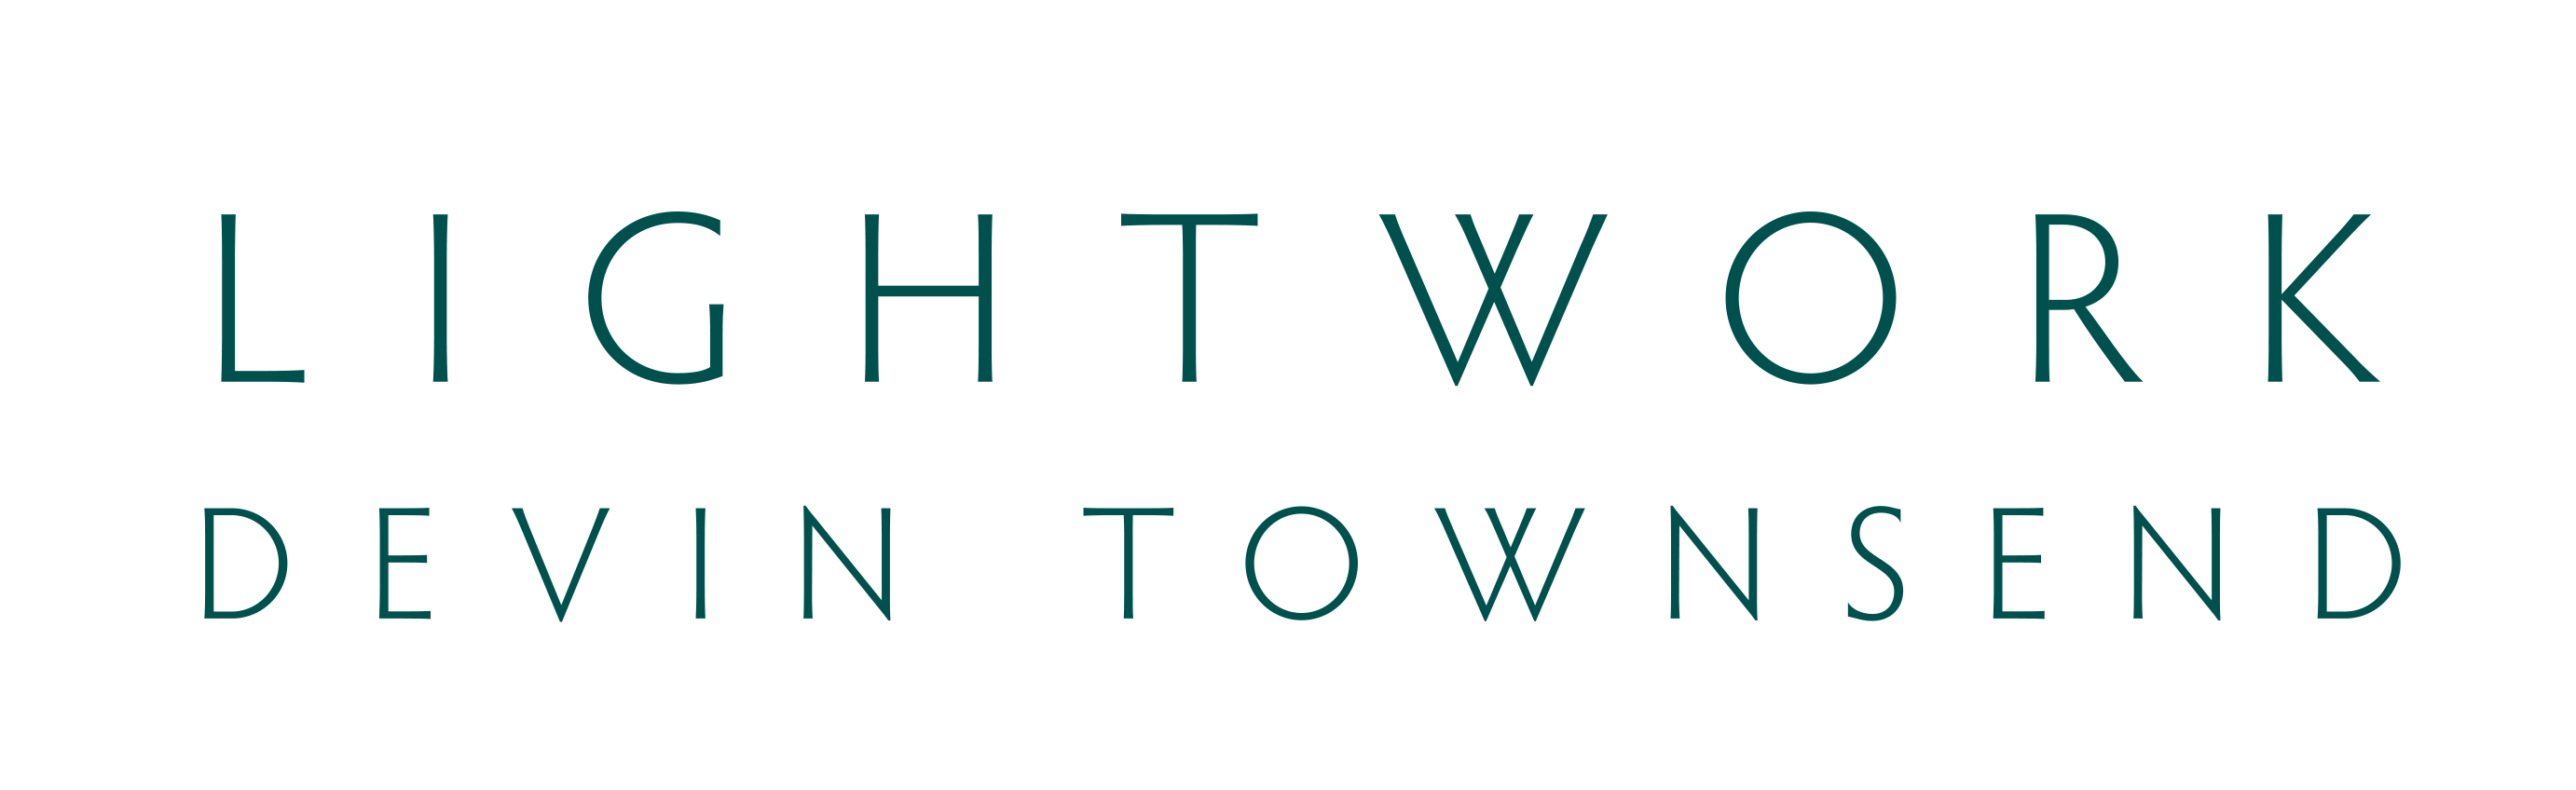 Lightwork by devin townsend logo